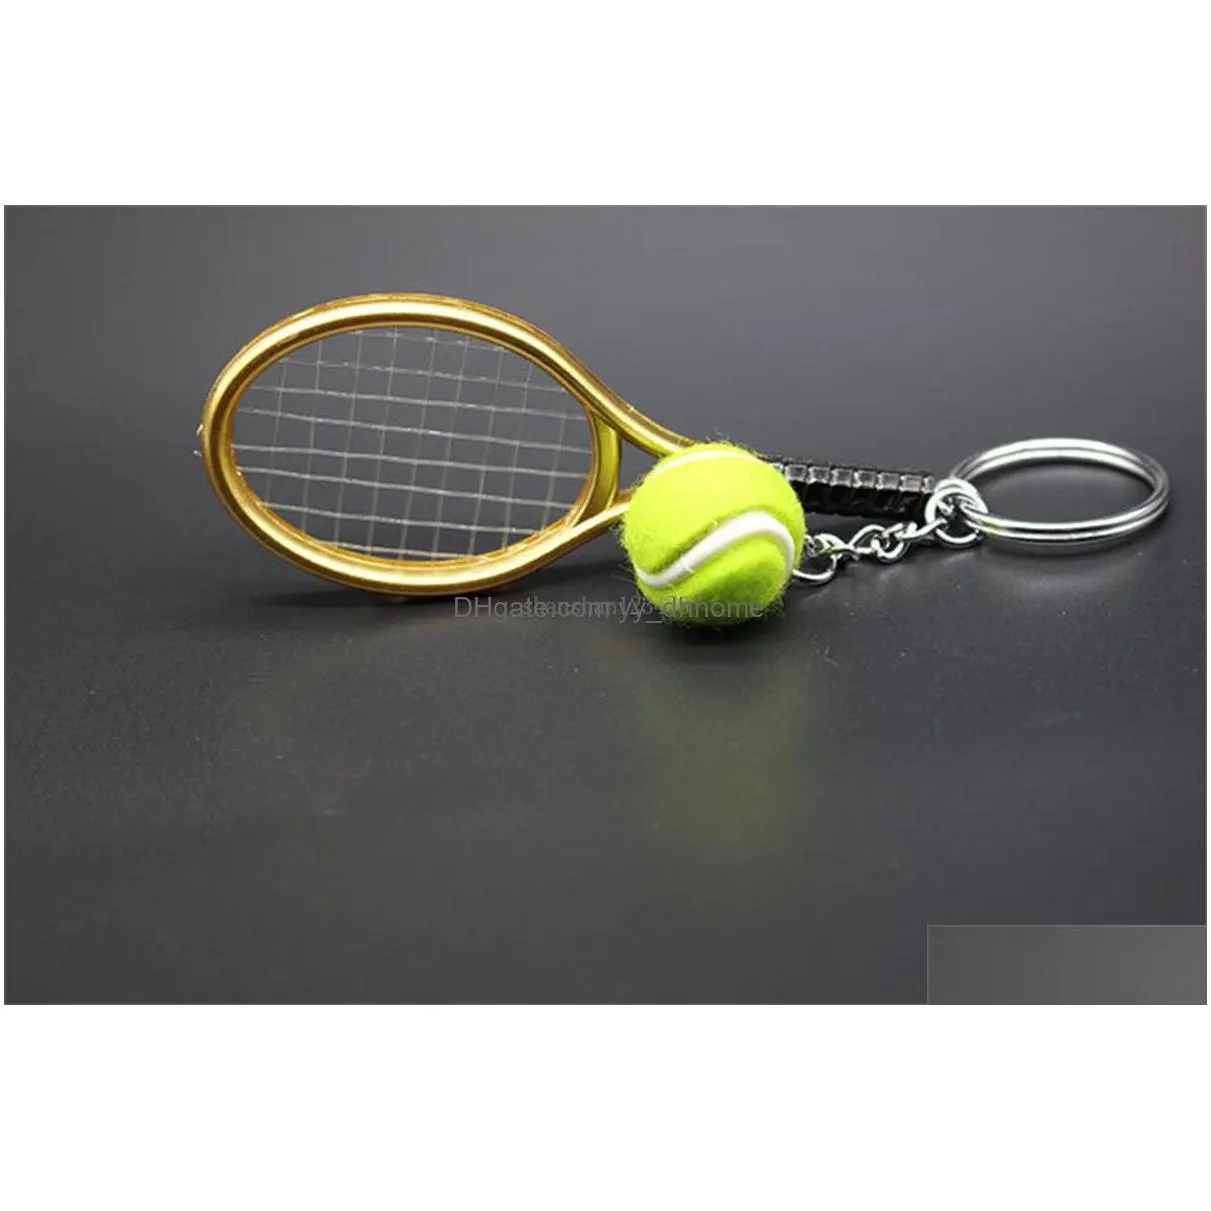  sport tennis racket keychain fashion tennis ball keyring rings bag hangs women men fashion jewelry gift